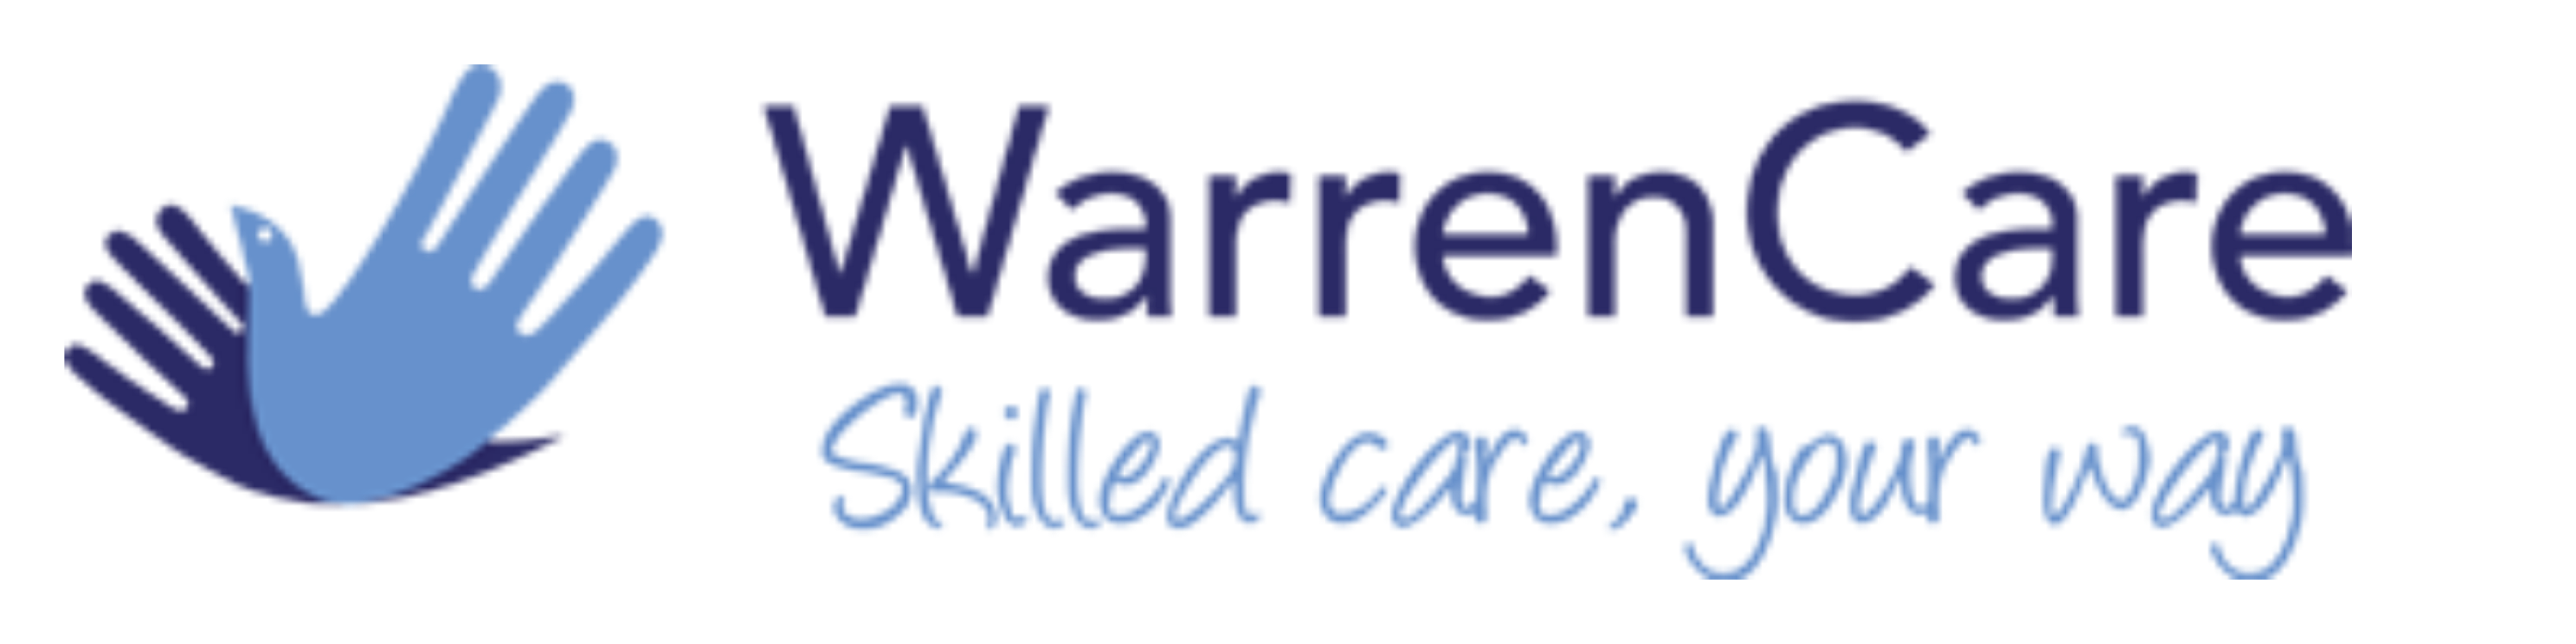 Warrencare